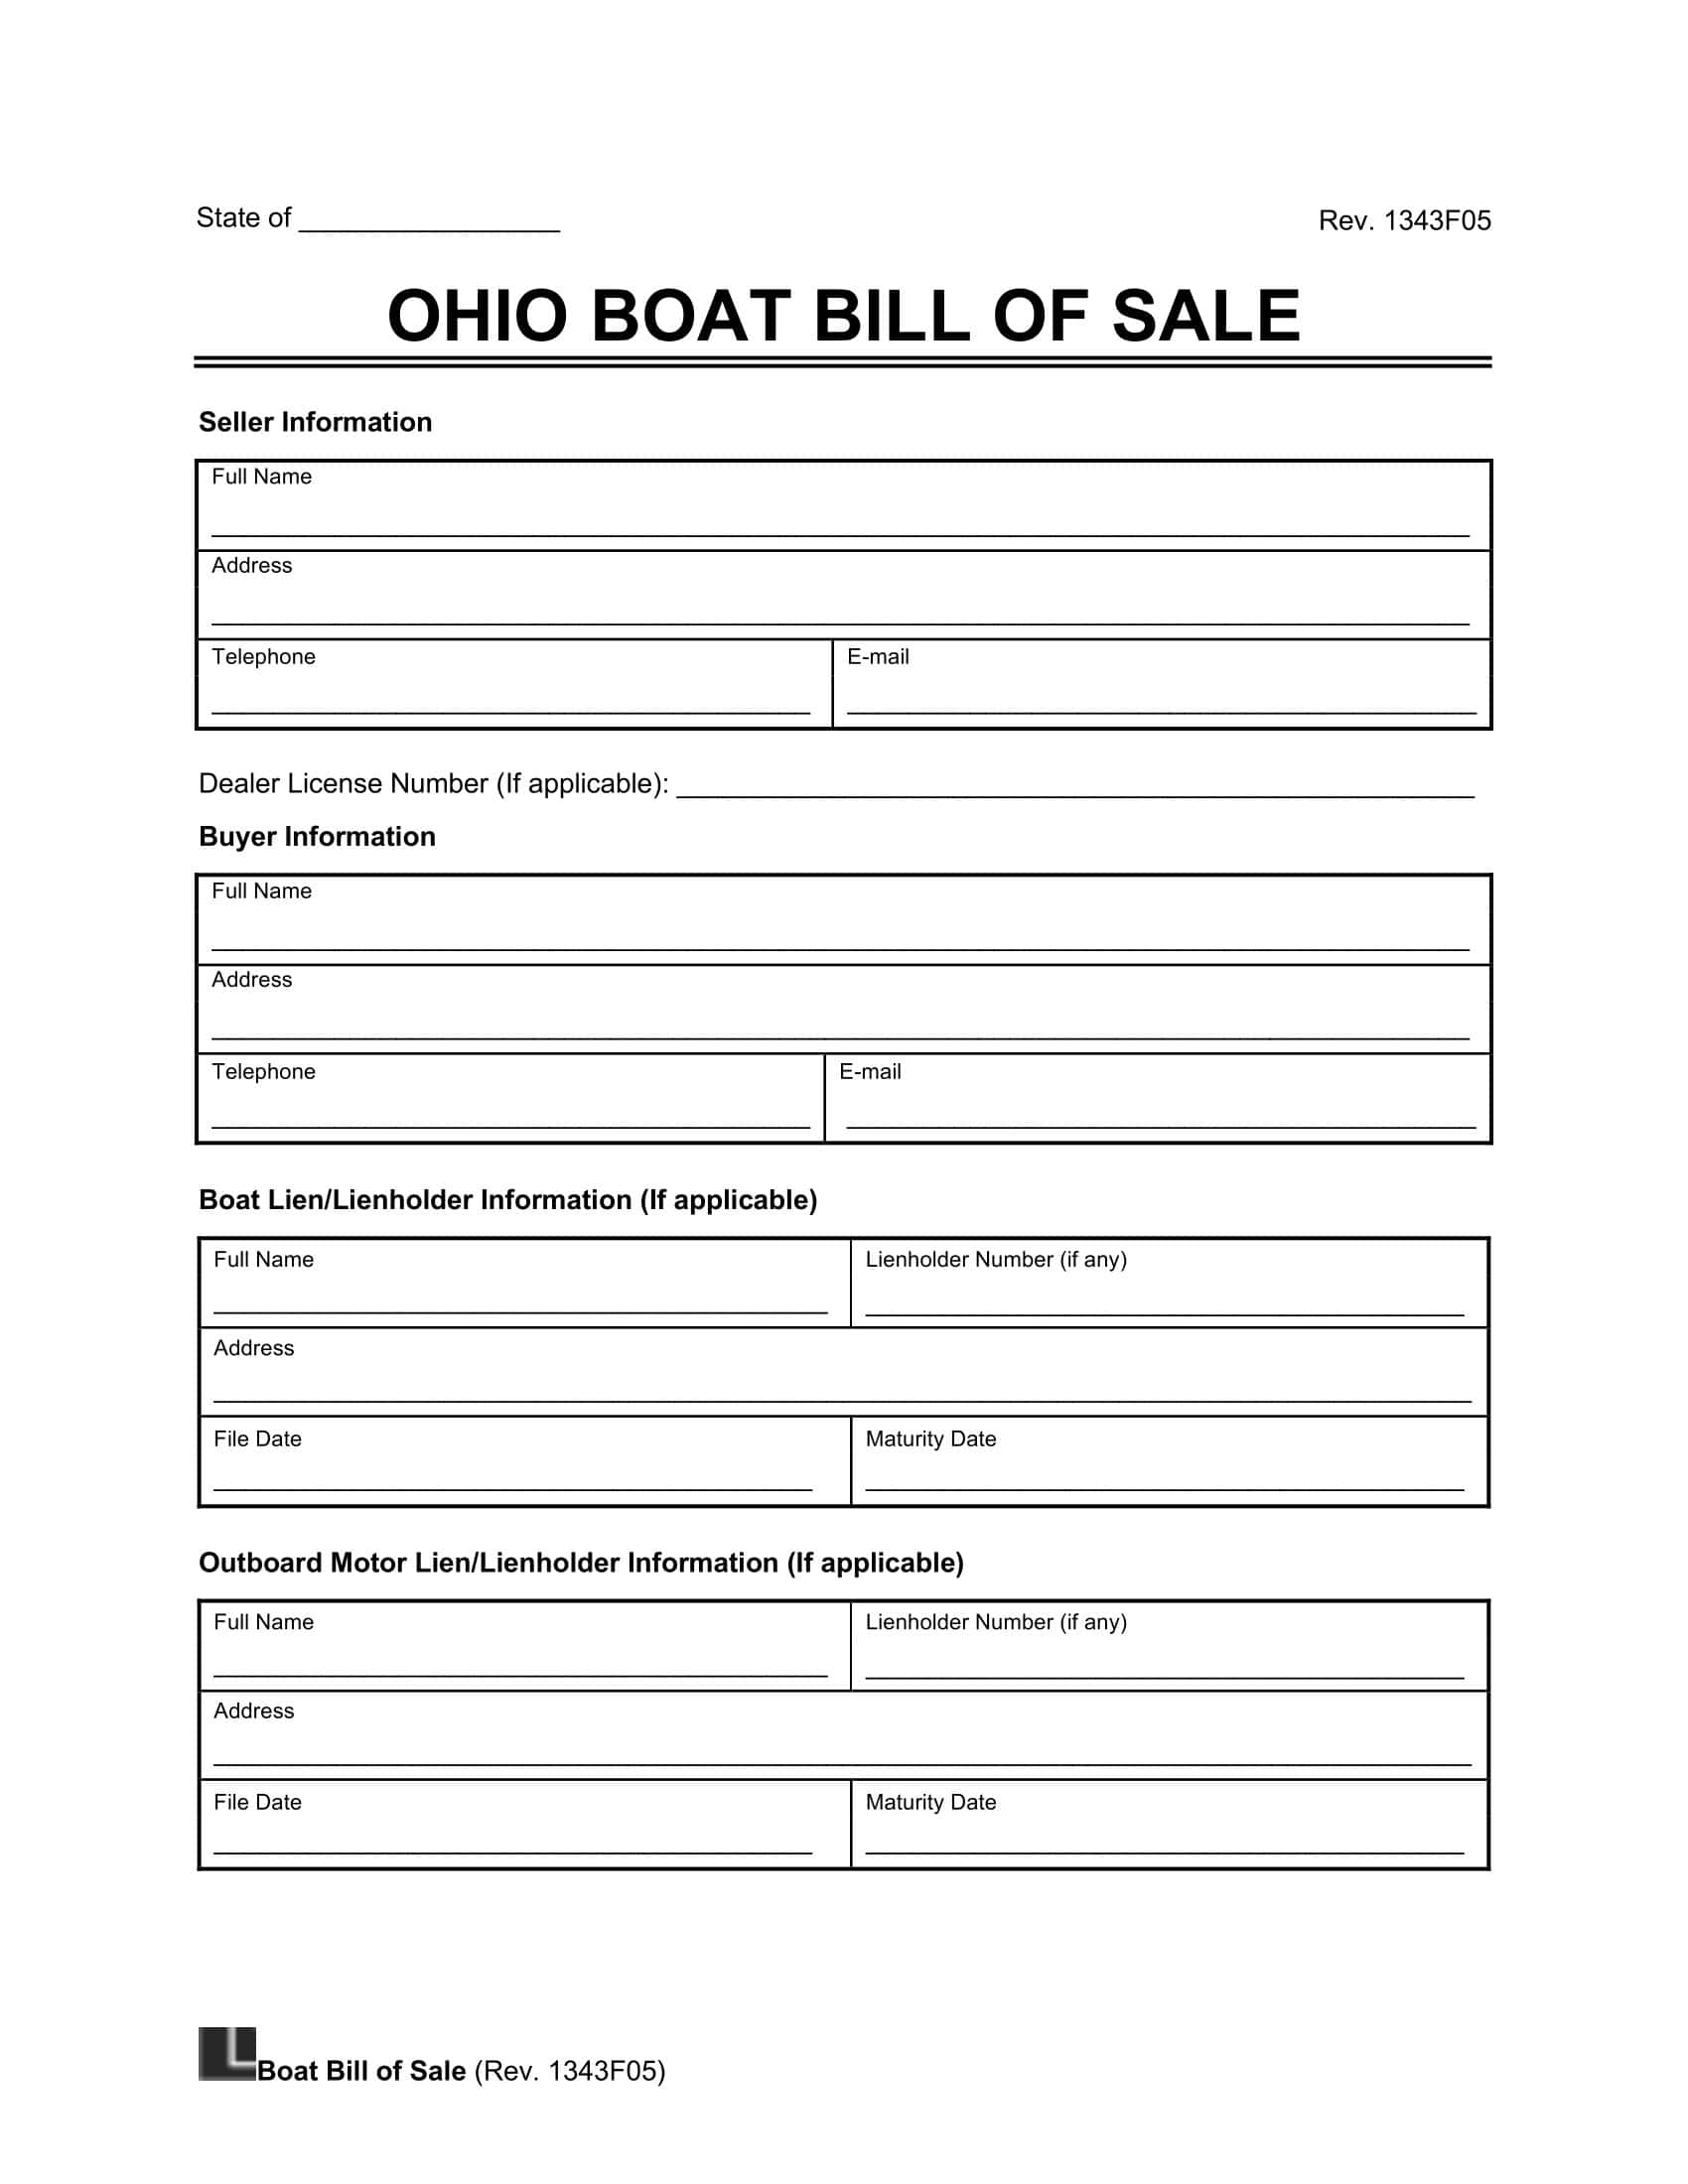 Ohio Boat Bill of Sale screenshot